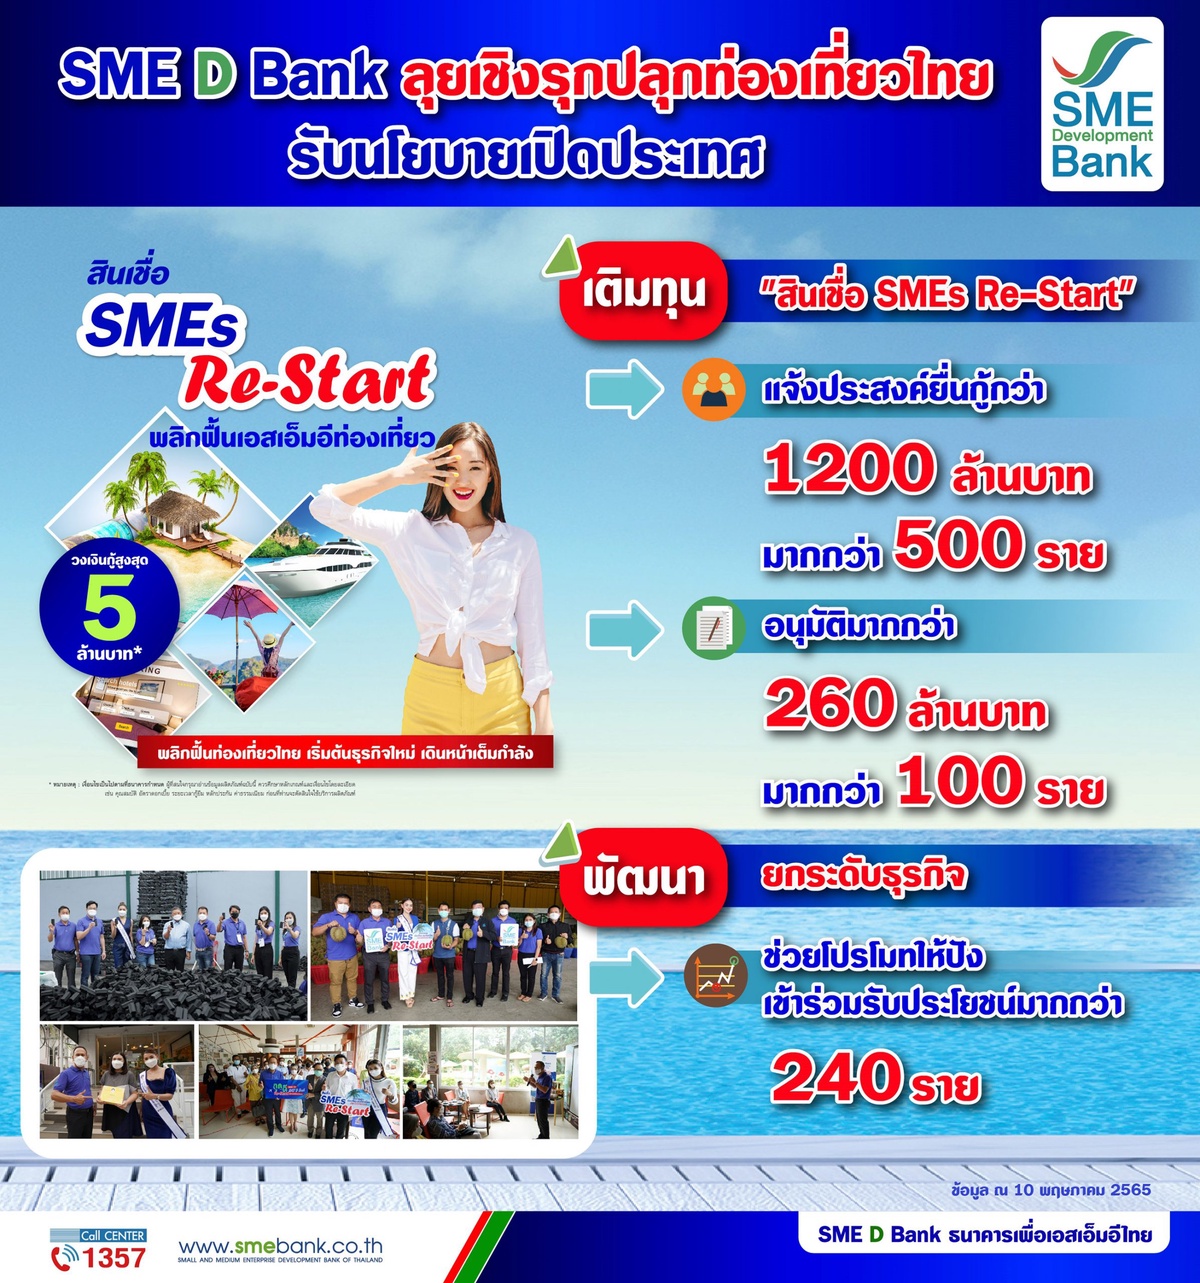 SME D Bank ลุยเชิงรุกปลุกท่องเที่ยวไทยรับนโยบายเปิดประเทศ ปลื้มเอสเอ็มอีตอบรับเติมทุนสินเชื่อ SMEs Re-Start คู่ร่วมโปรแกรมพัฒนา